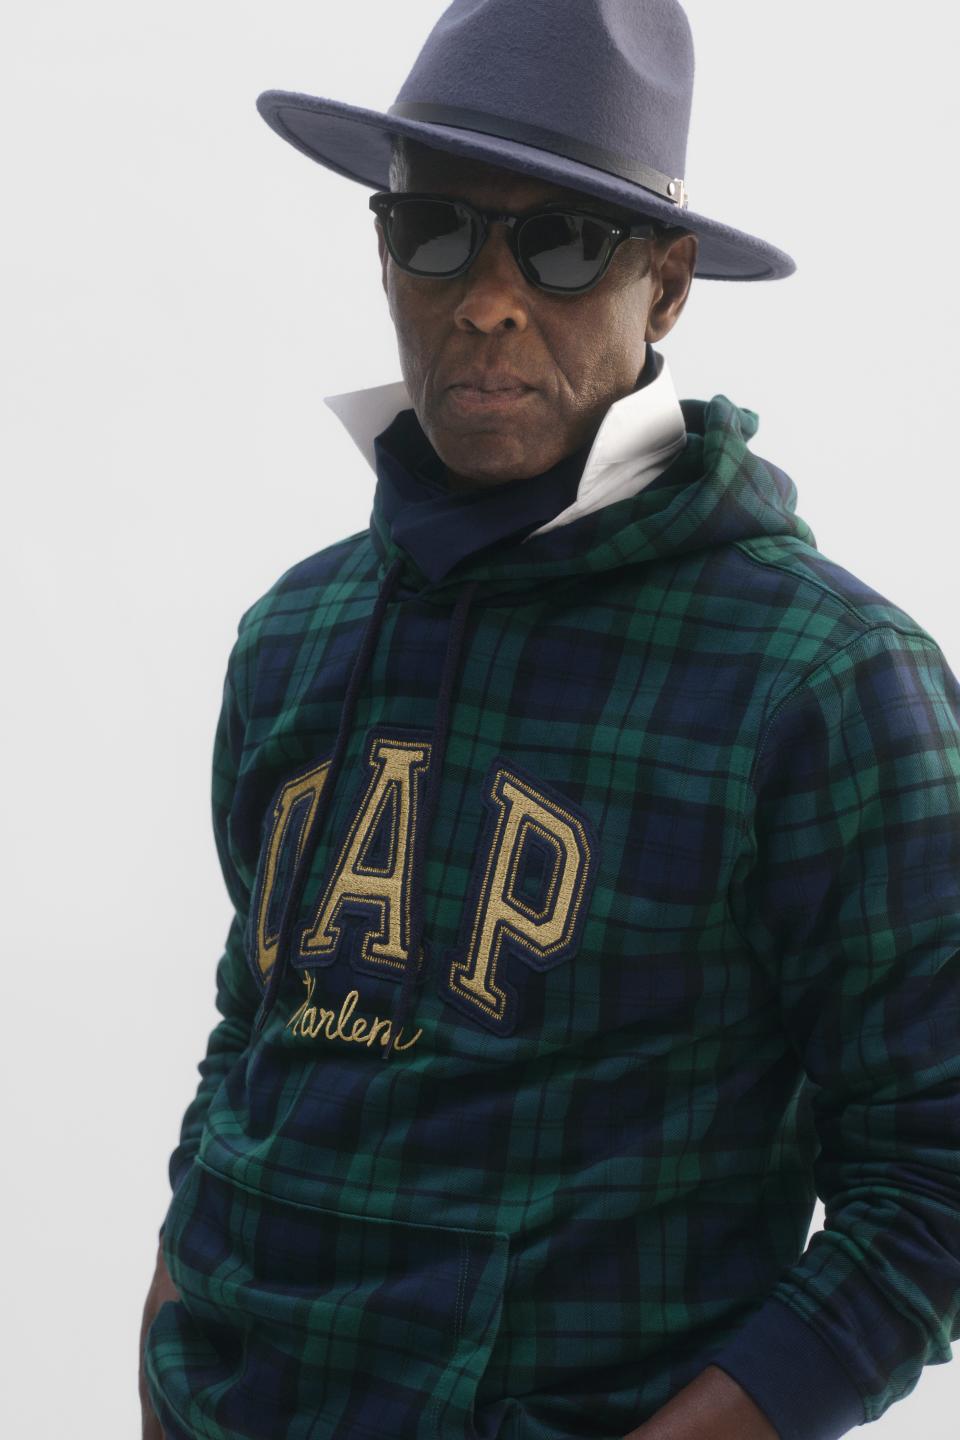 One of the Dap hoodies modeled by Dapper Dan for Gap.